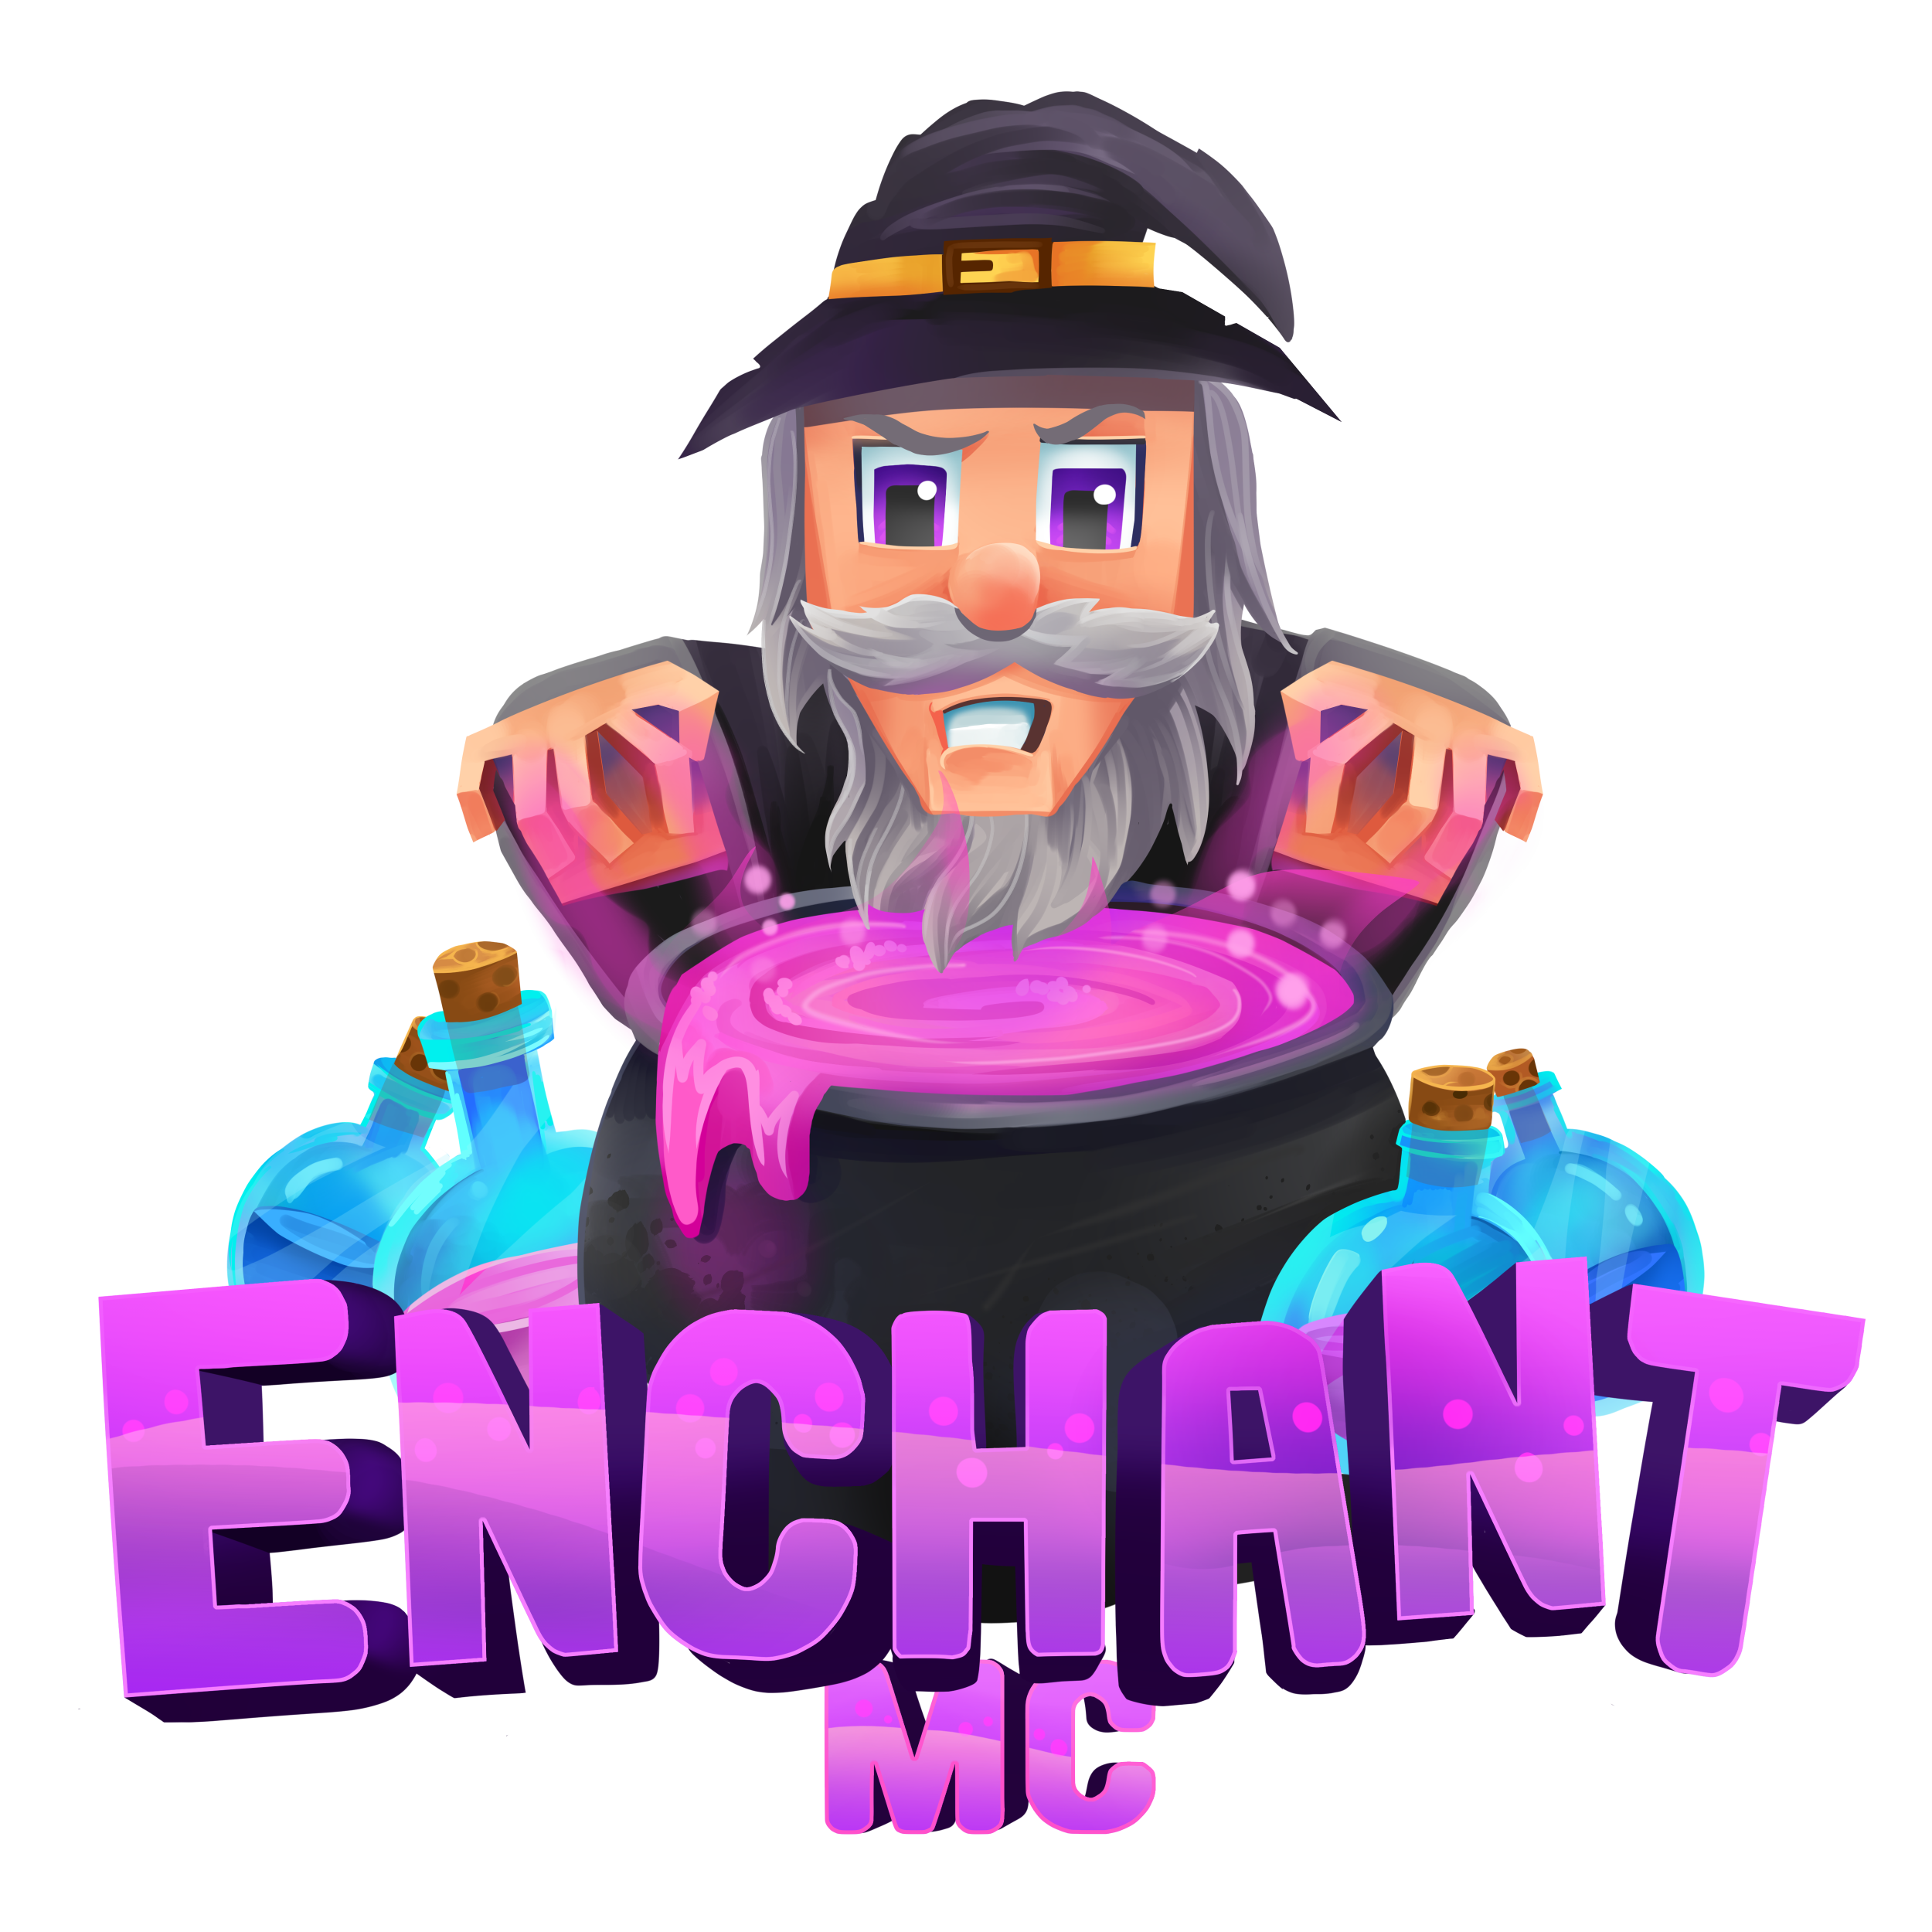 EnchantMC